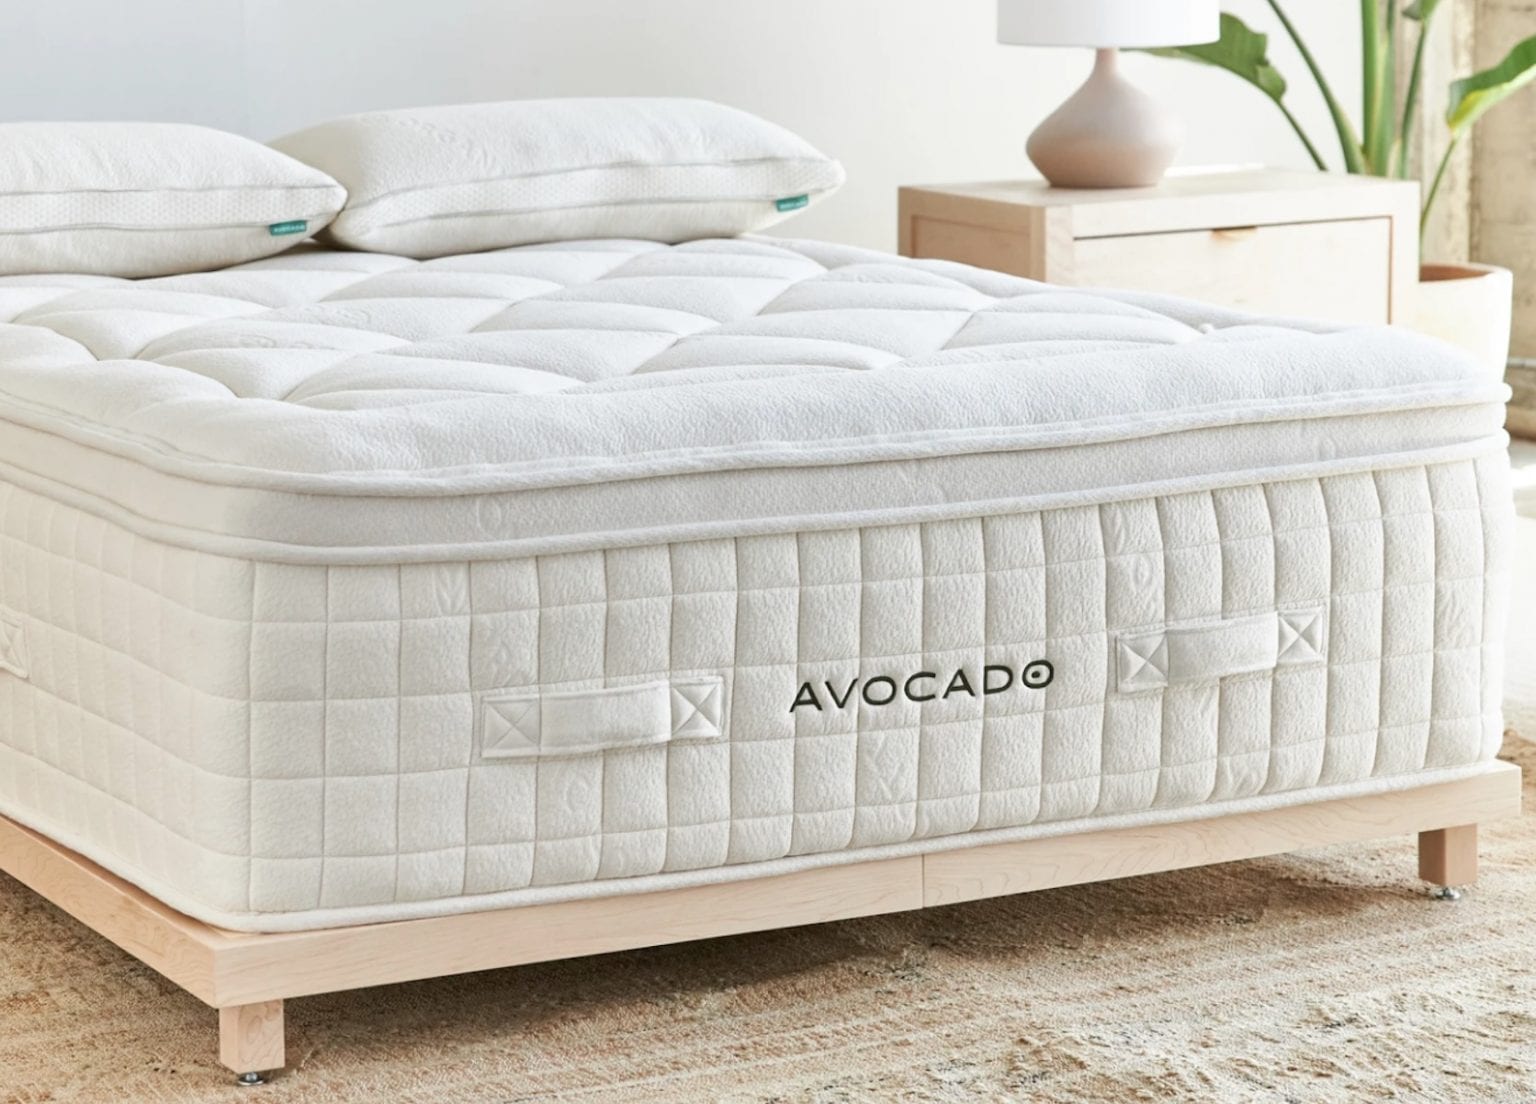 pressure mapping avocado pillow top mattress